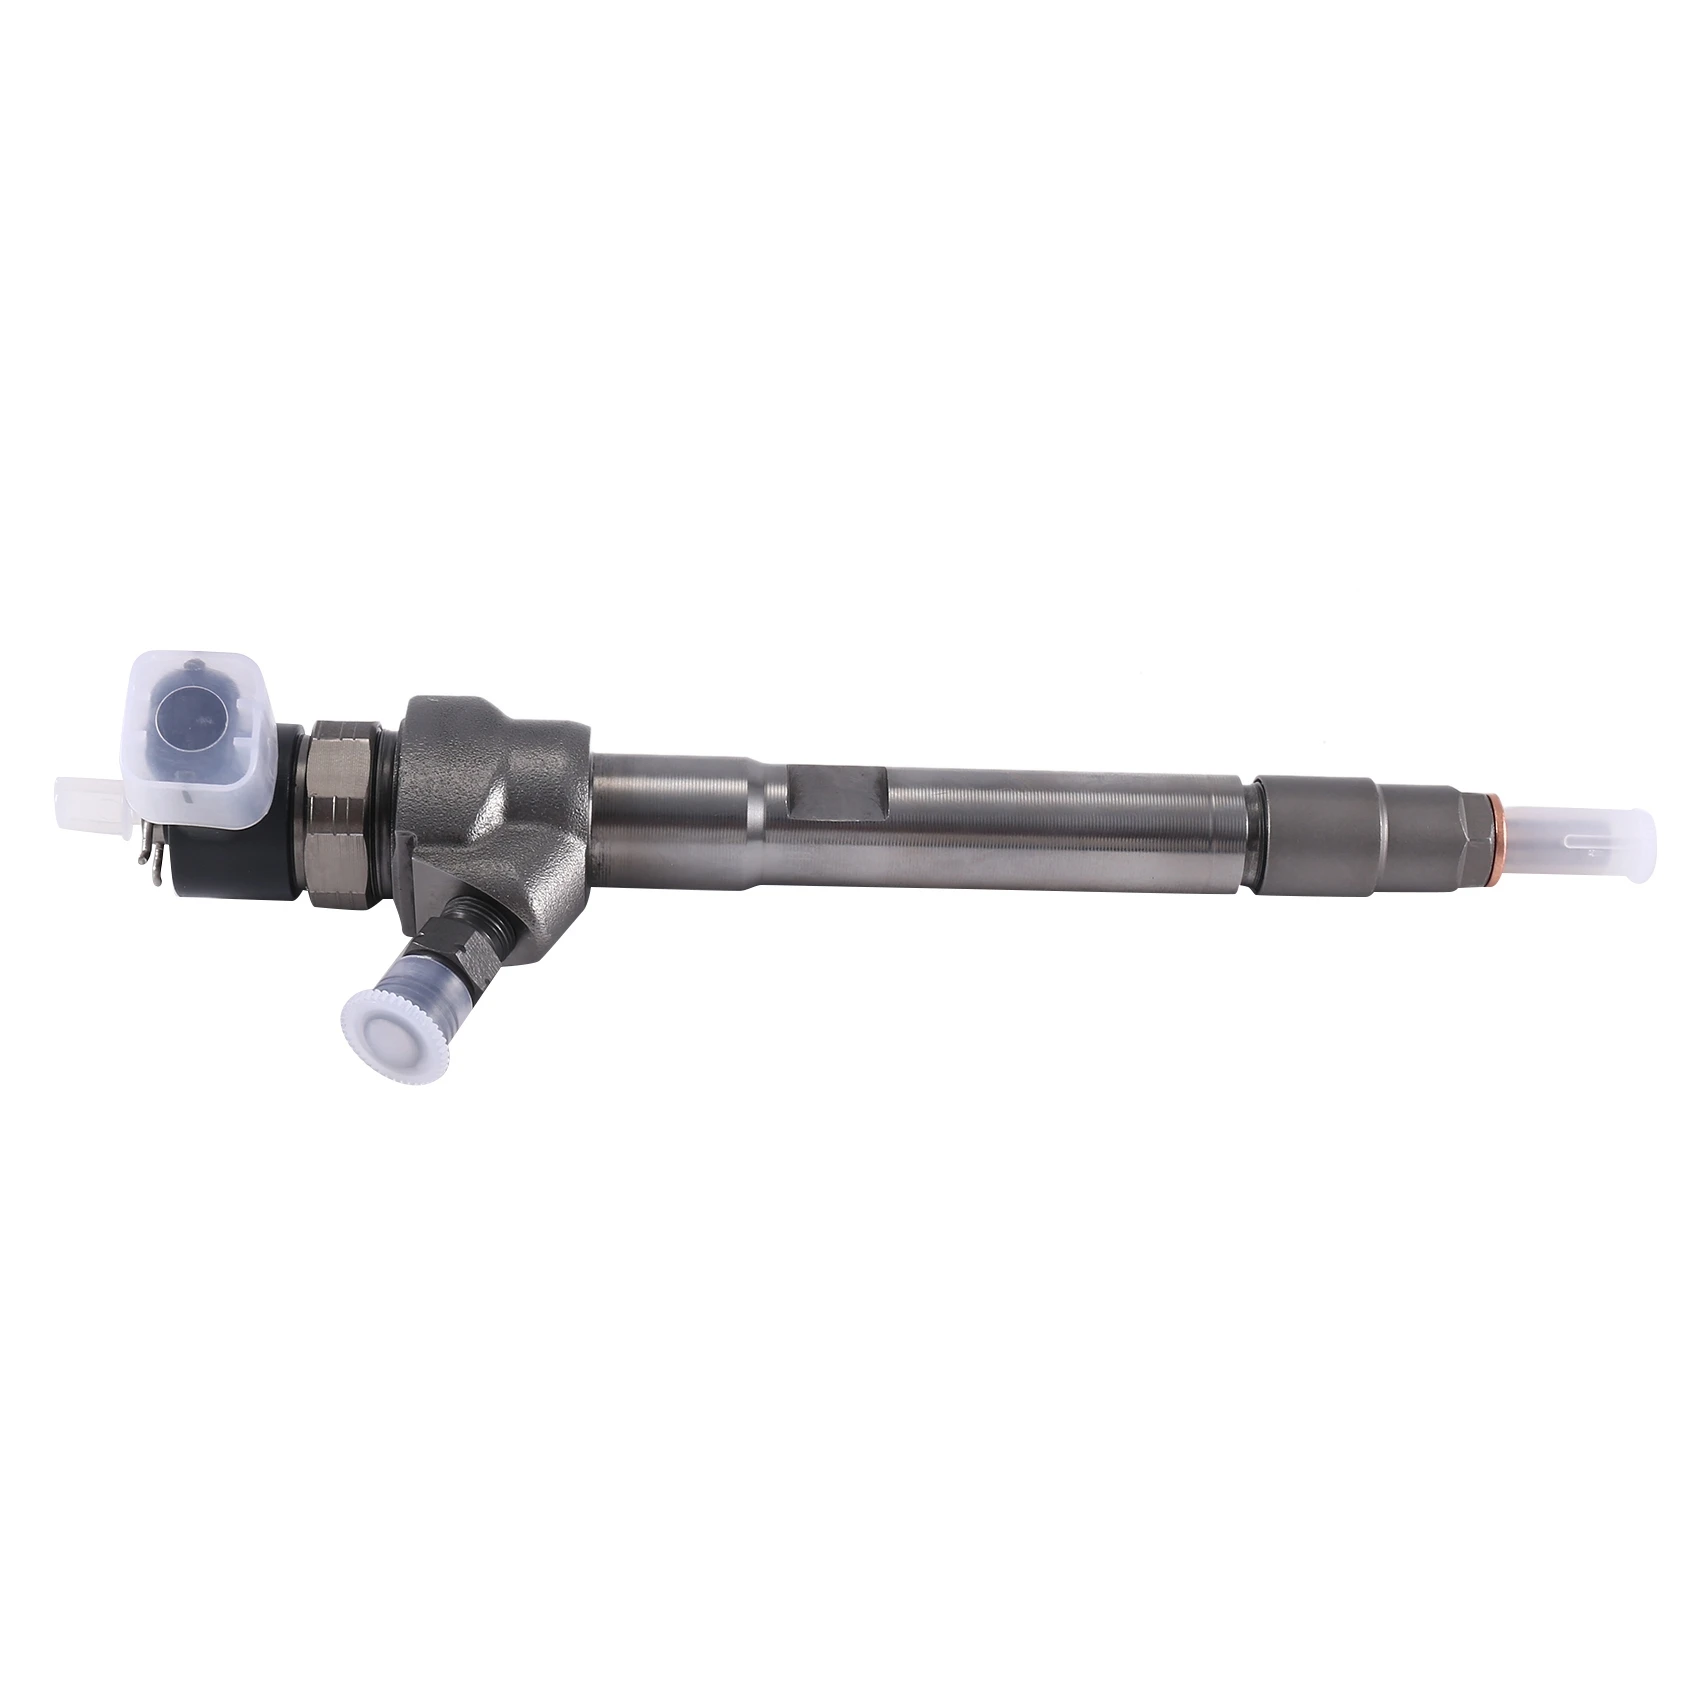 

0445110363 New Crude Oil Fuel Injector Nozzle for Bosch for ISUZU JMC 4D24 4JB1 9P2-9K546-AA